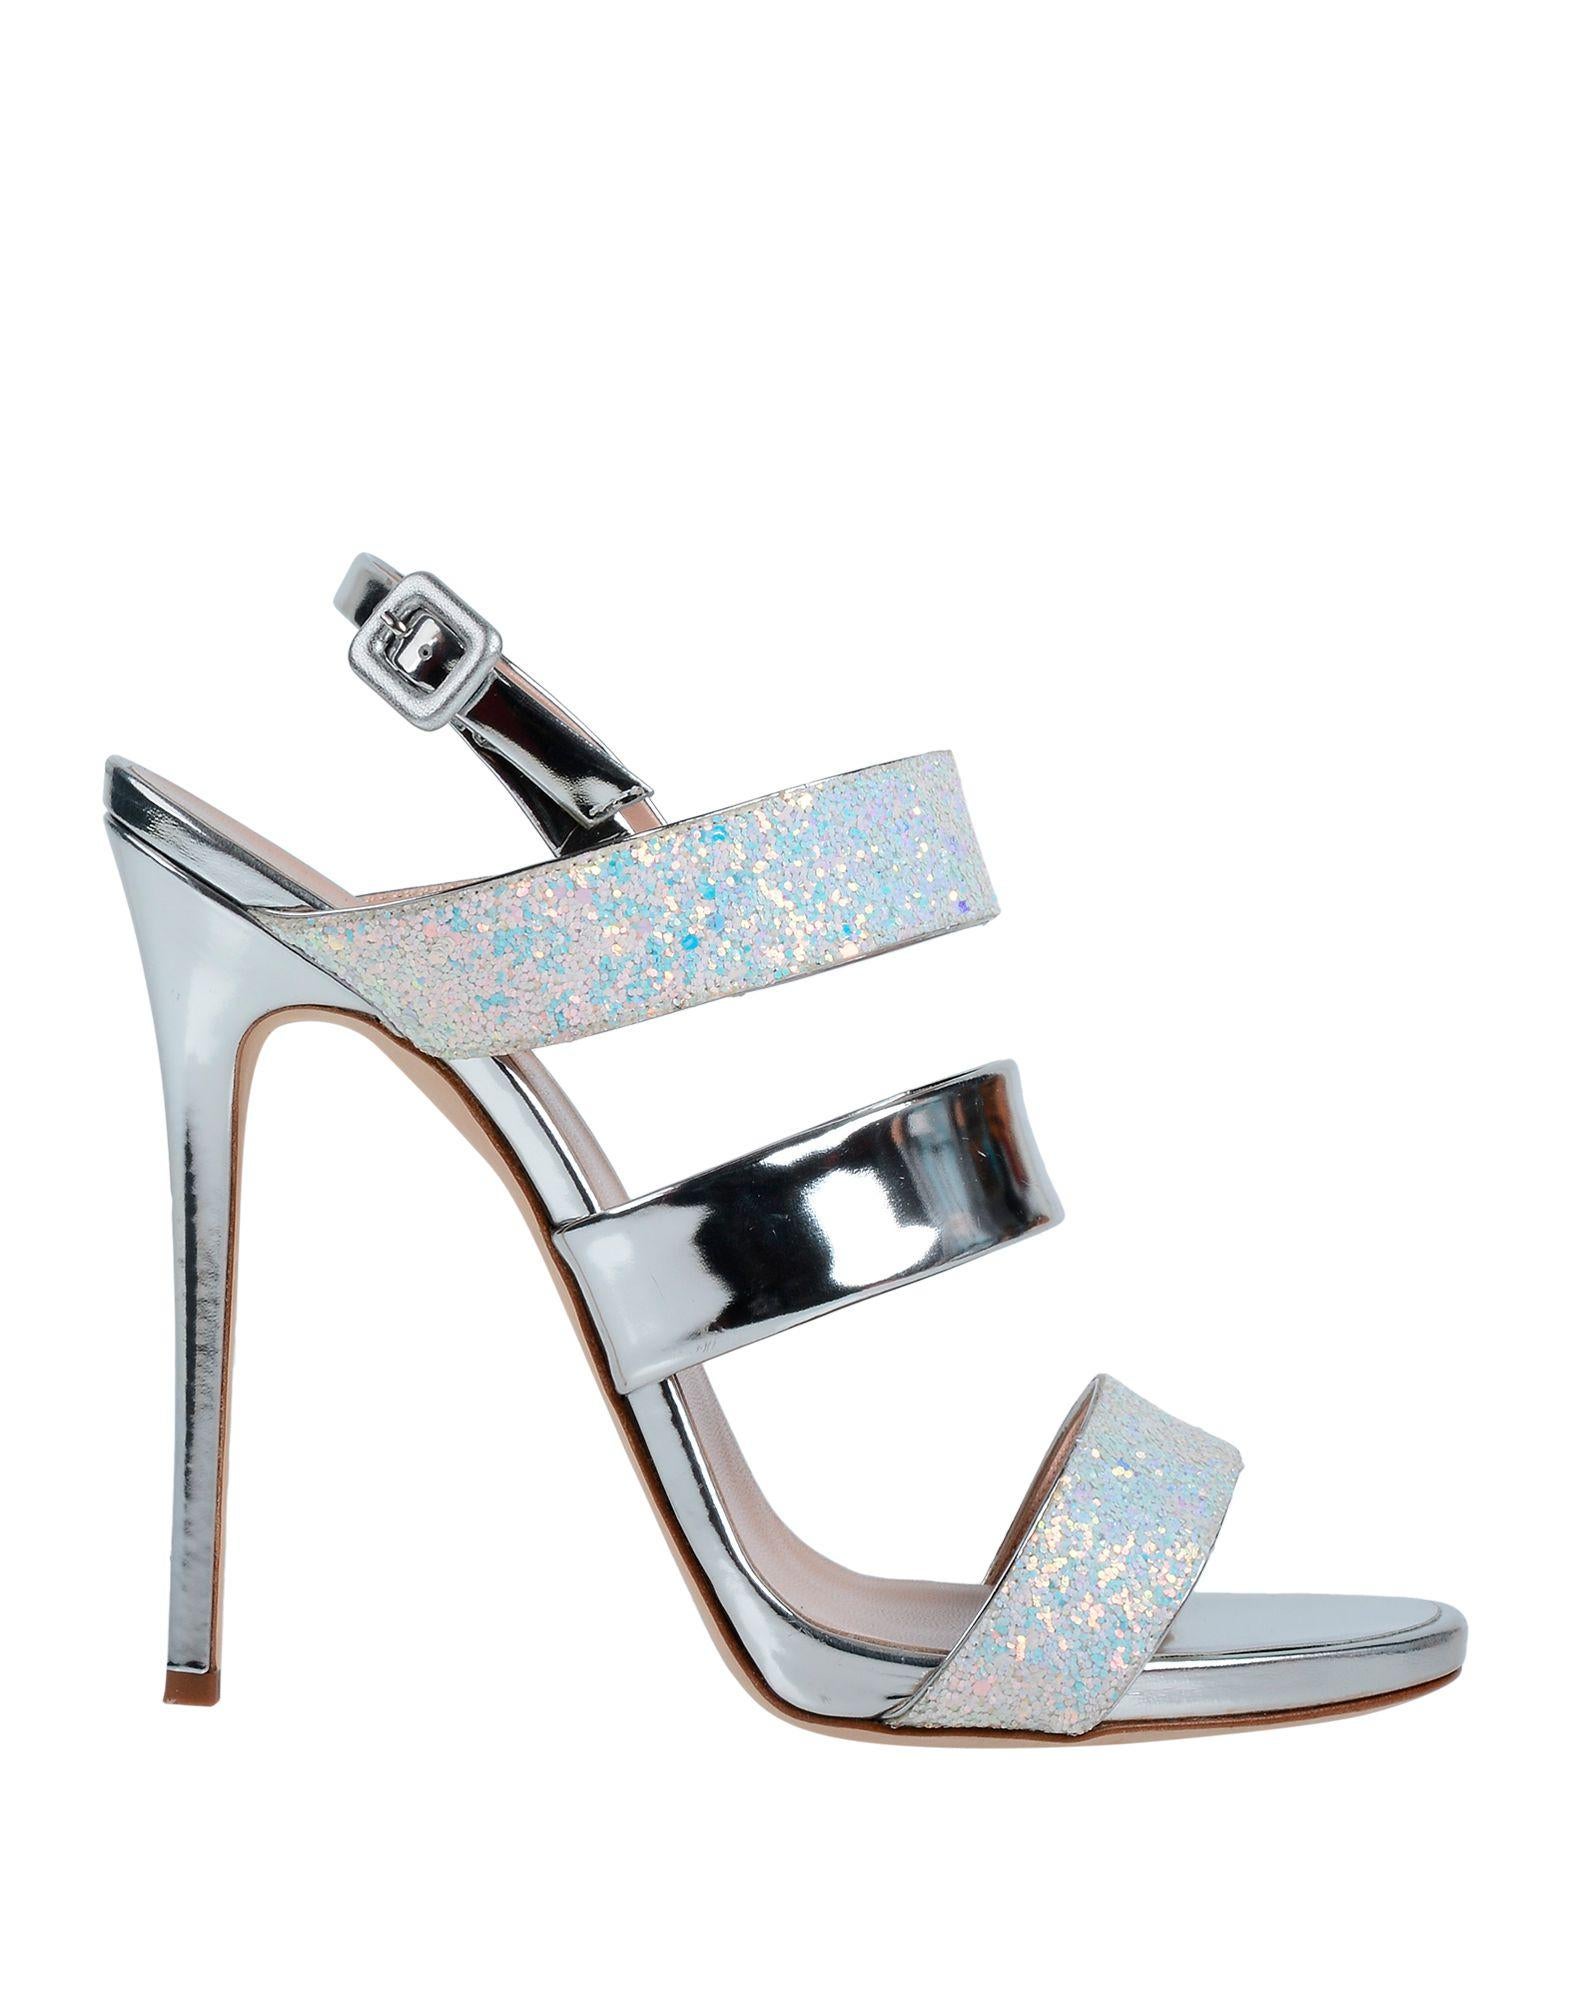 Women's Giuseppe Zanotti NEW Silver Leather Glitter Evening Sandals Heels in Box